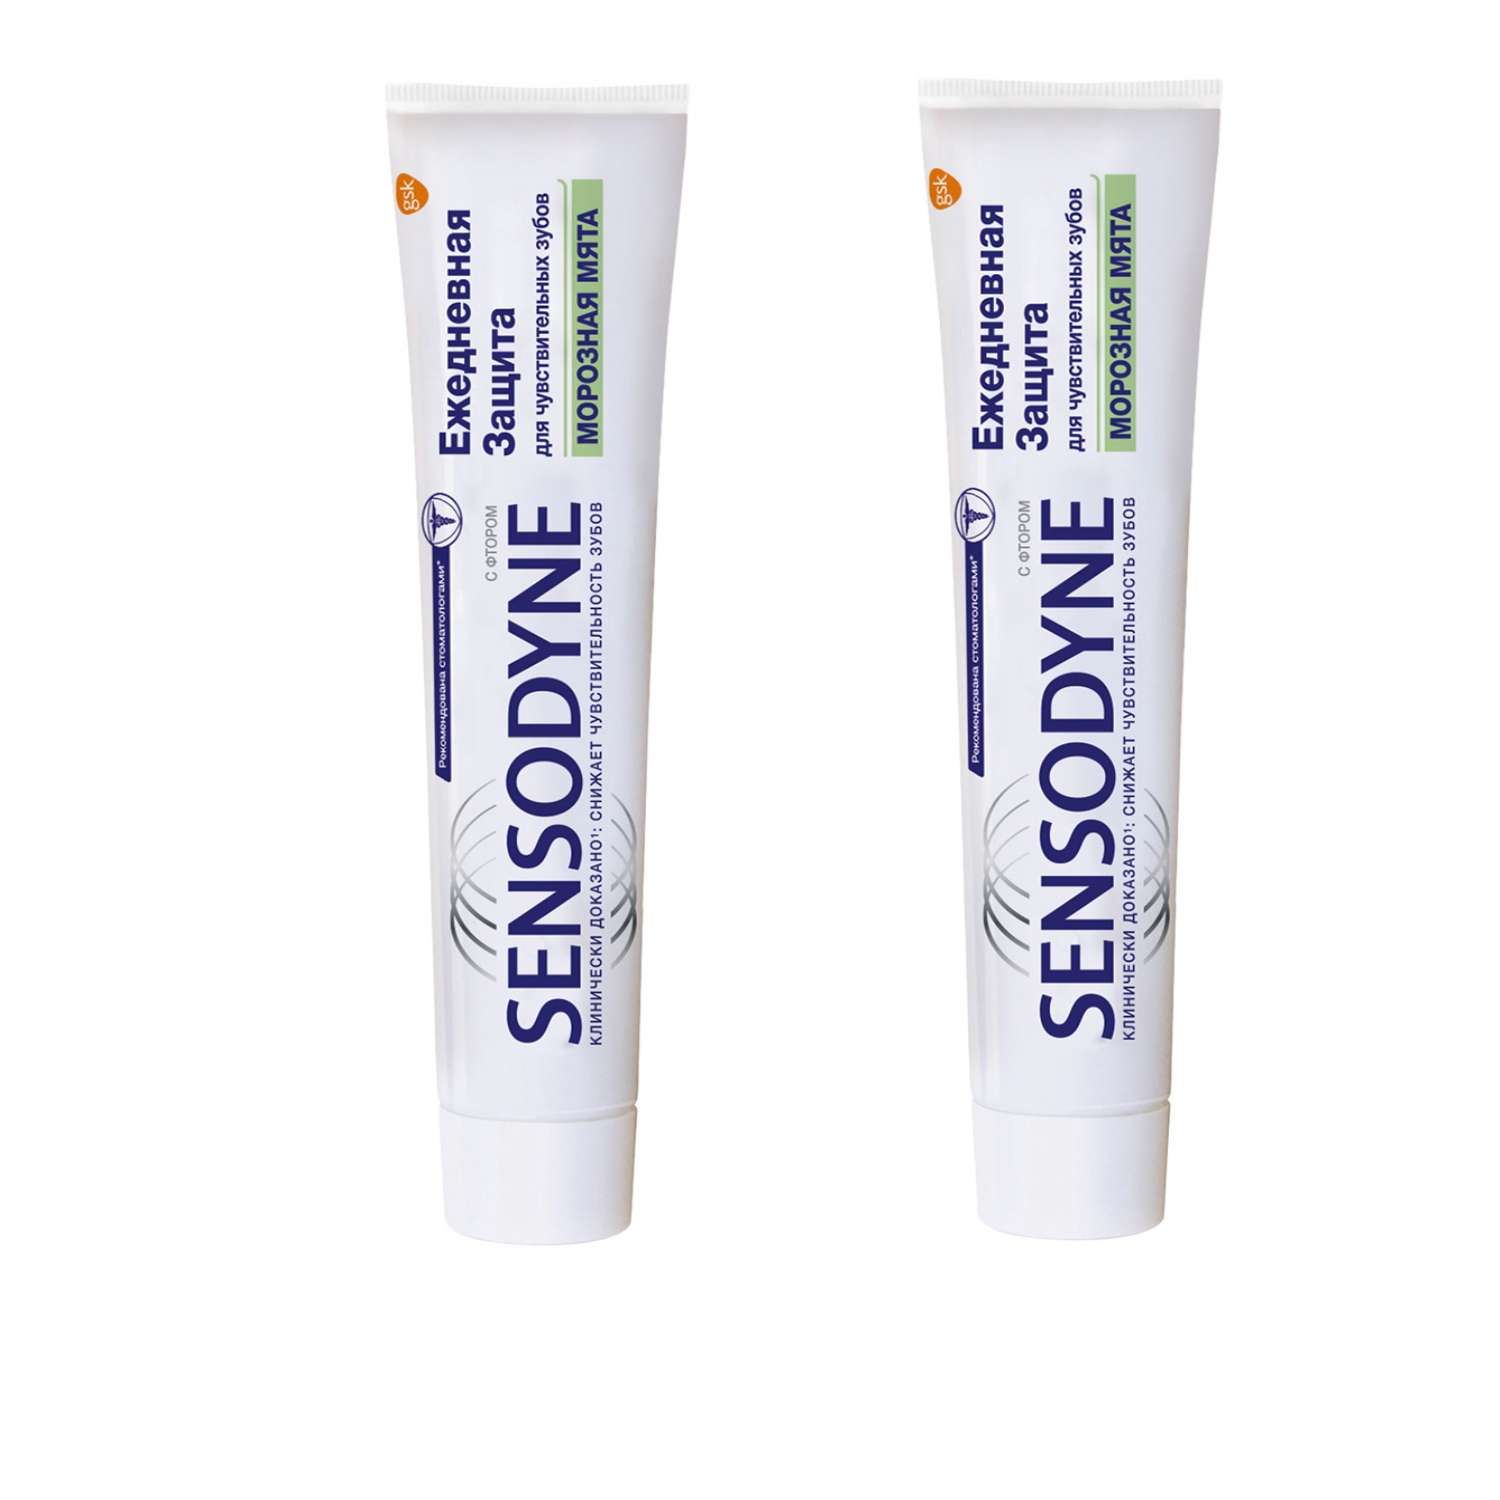 Зубная паста Sensodyne Ежедневная Защита Морозная Мята 65г 2 штуки - фото 1